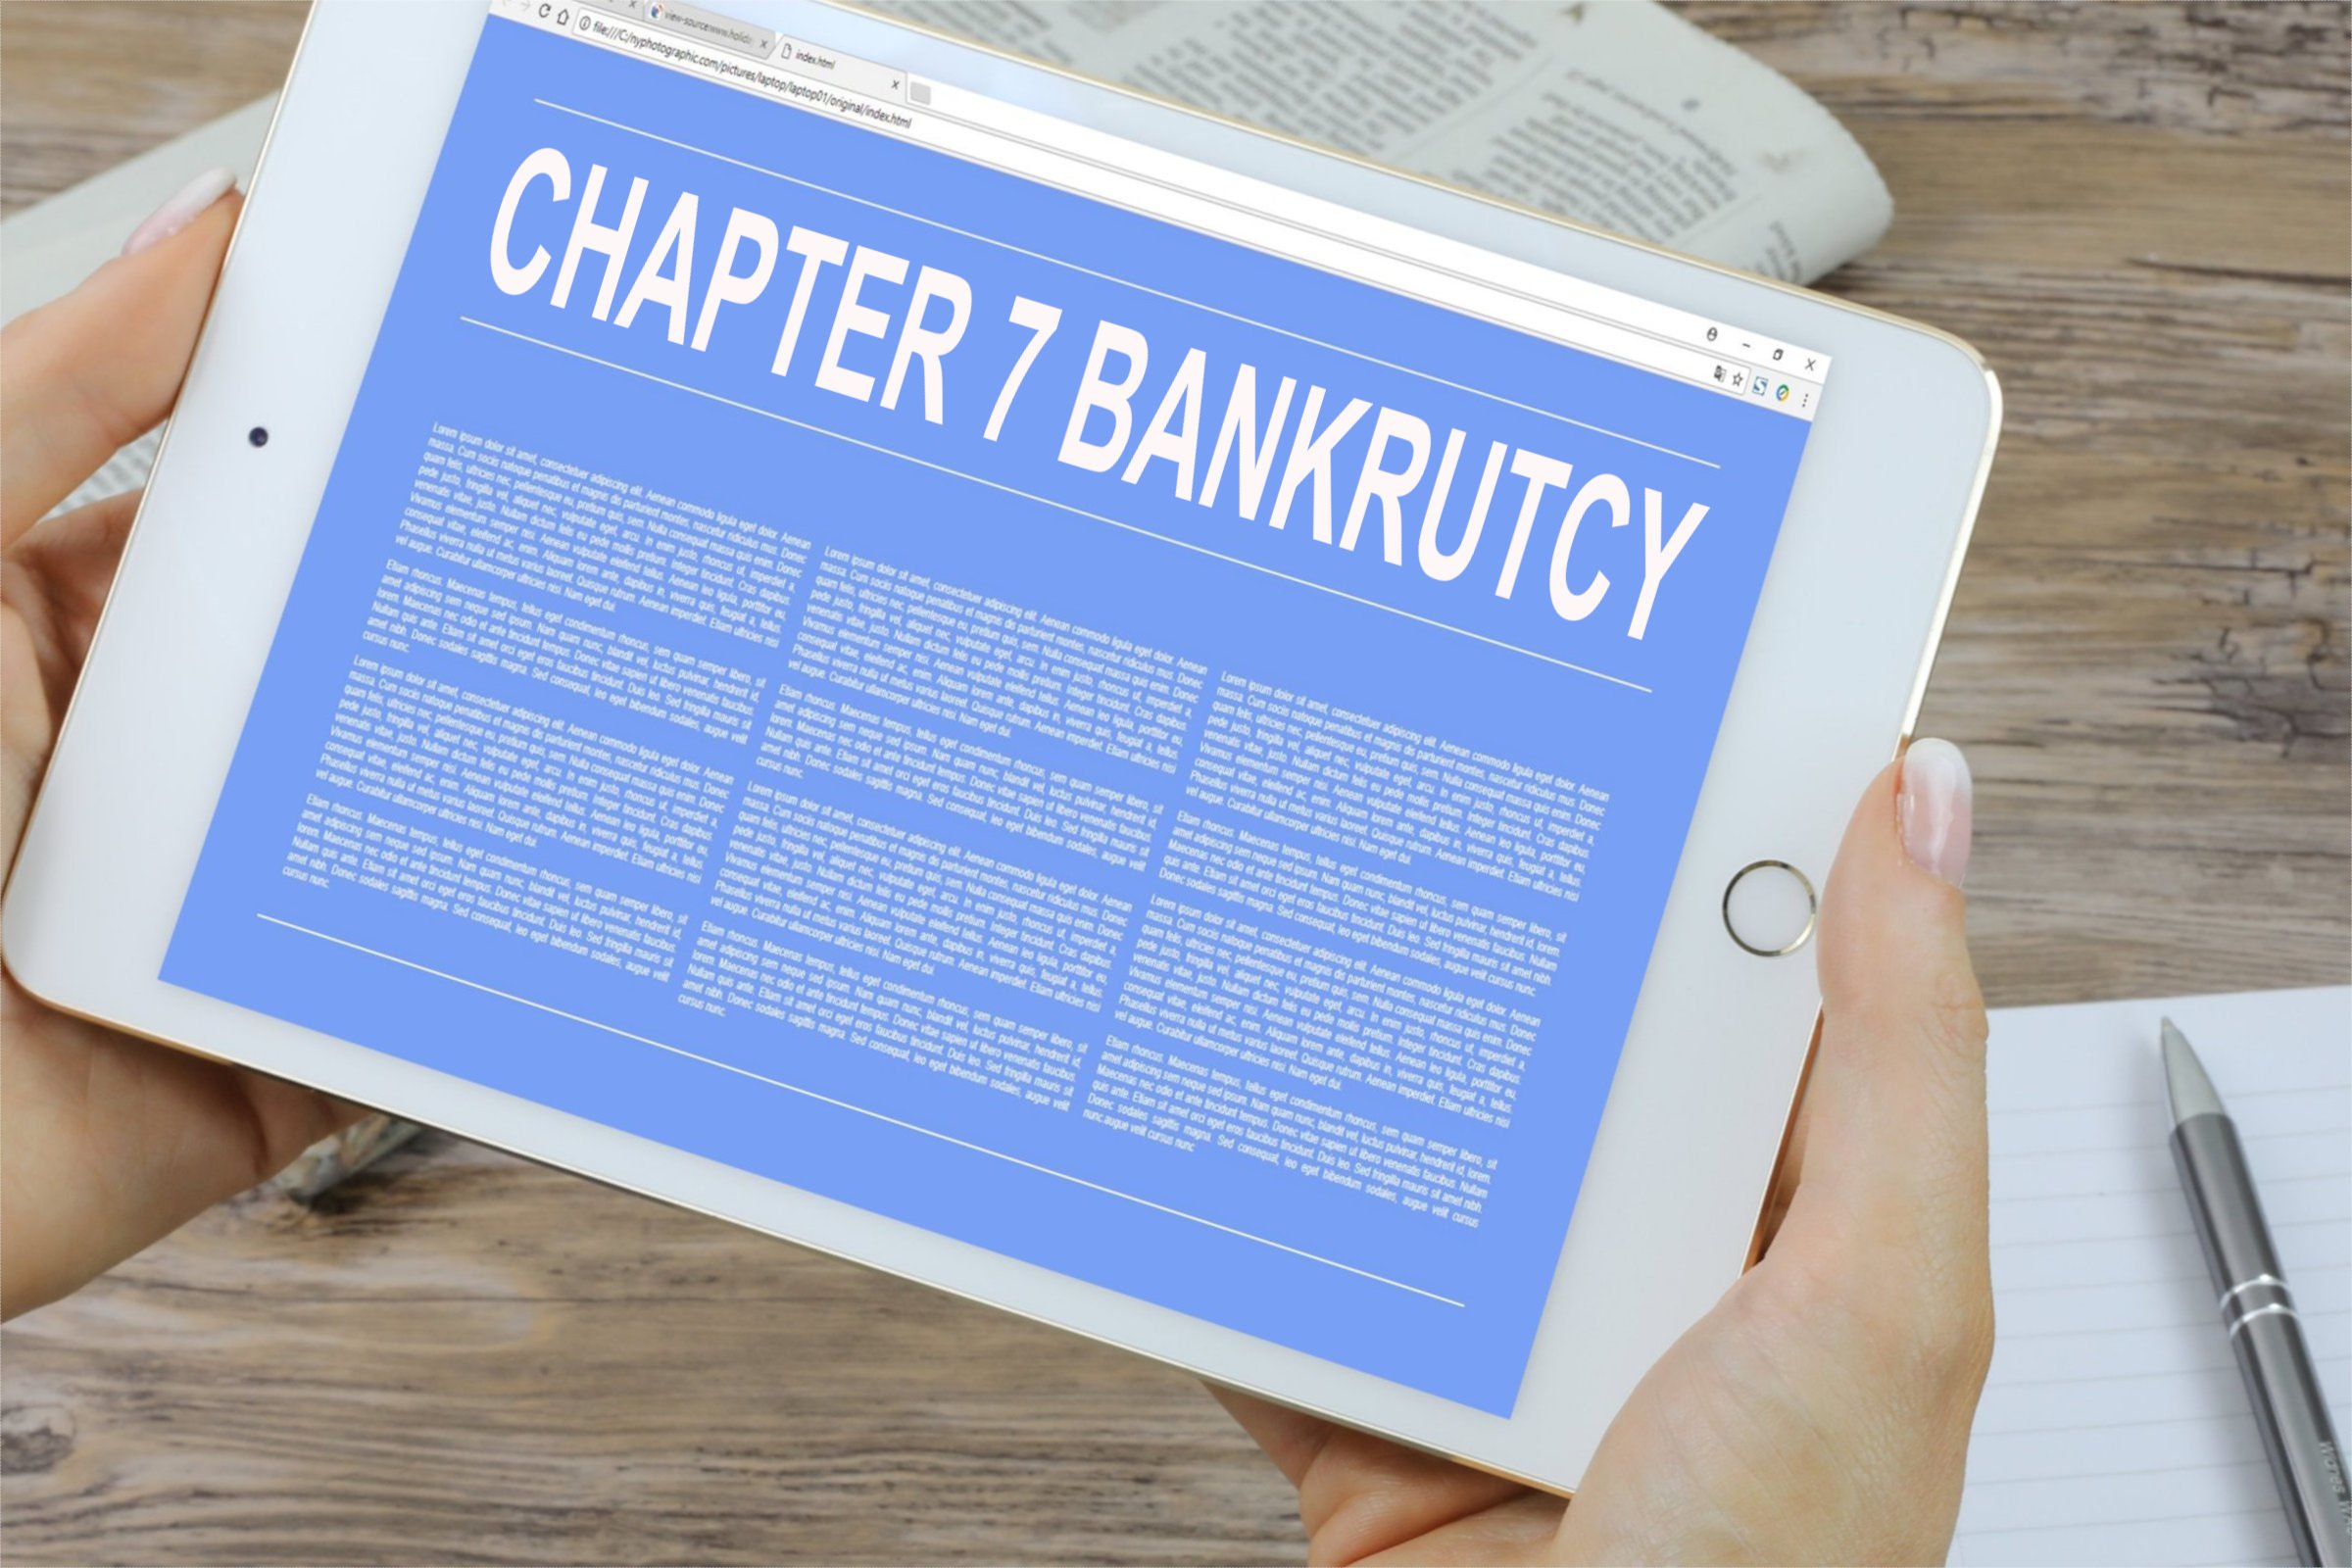 chapter 7 bankrutcy